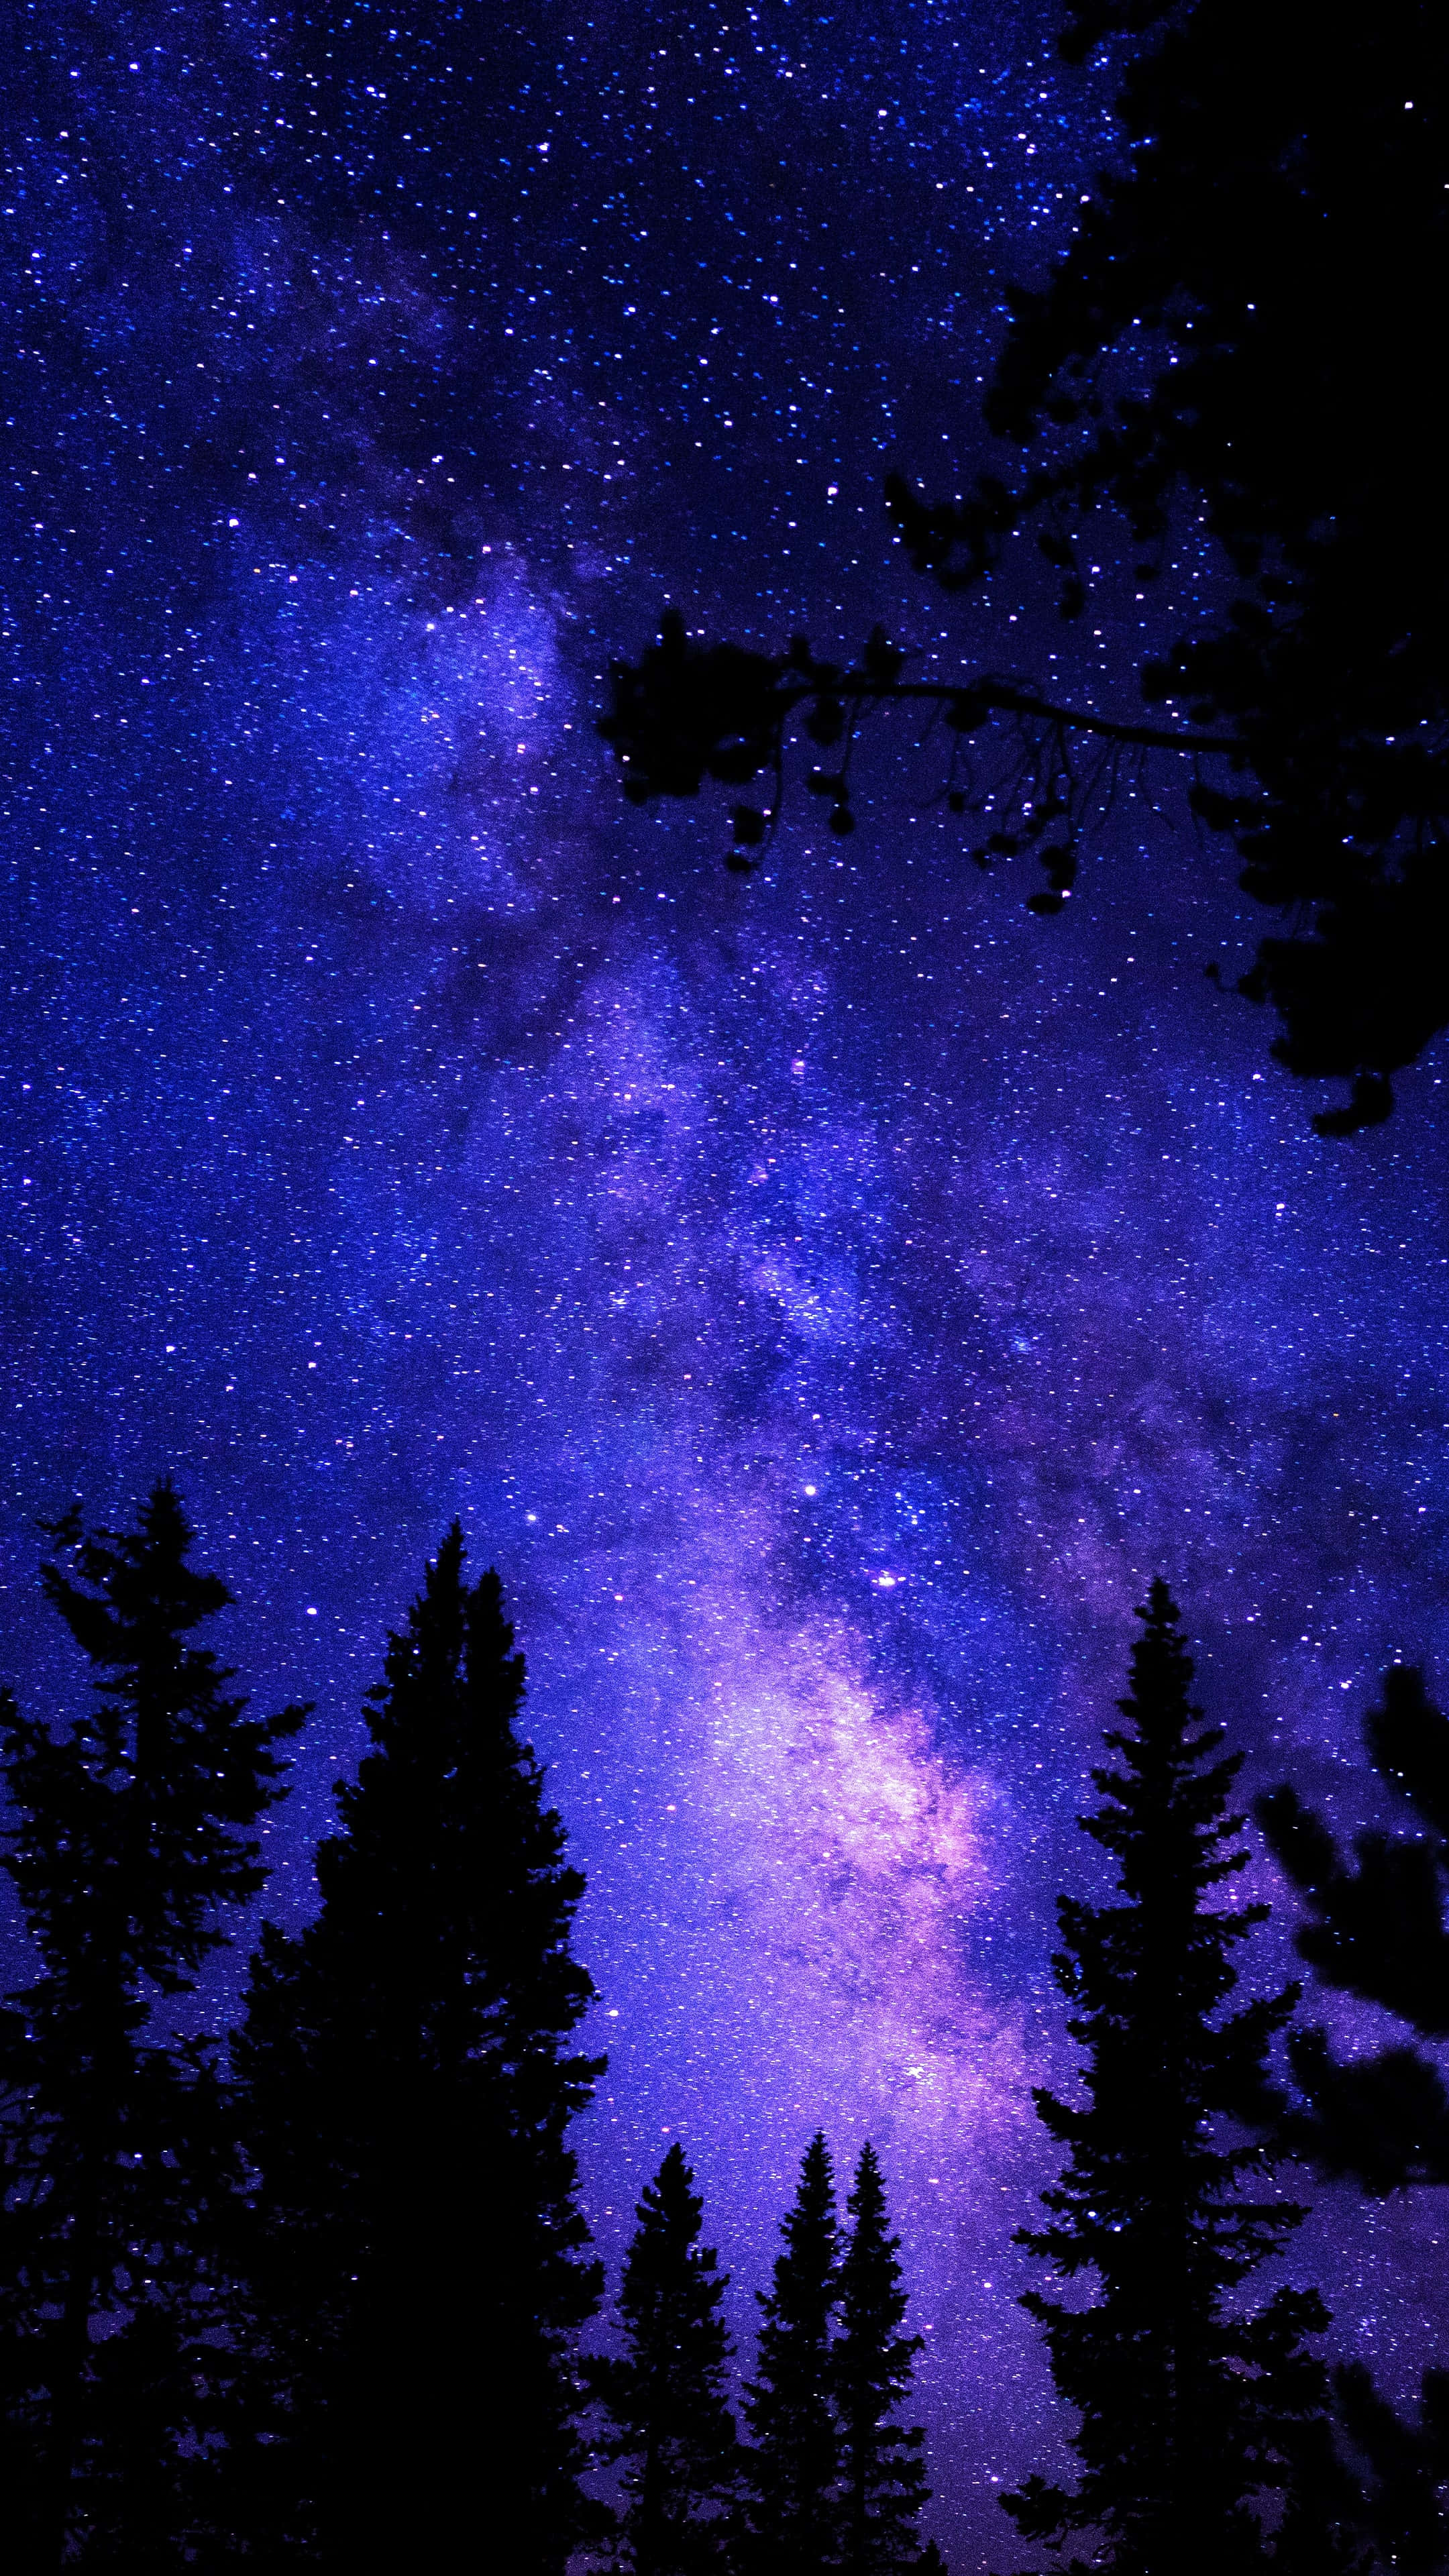 Galaxy 2160 X 3840 Background